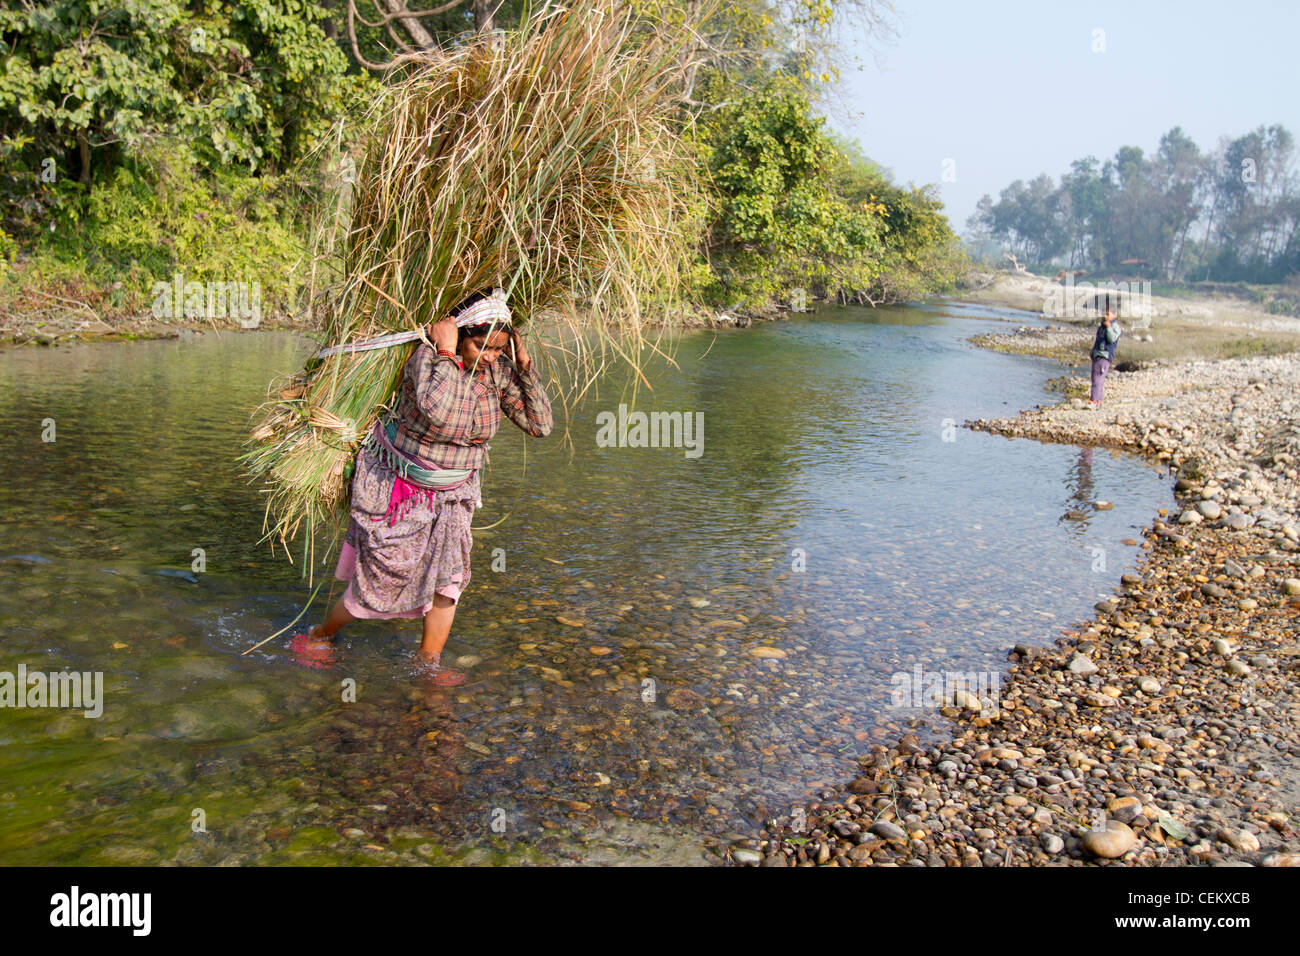 People crossing river grass cutting season Bardia national park Nepal Asia Stock Photo